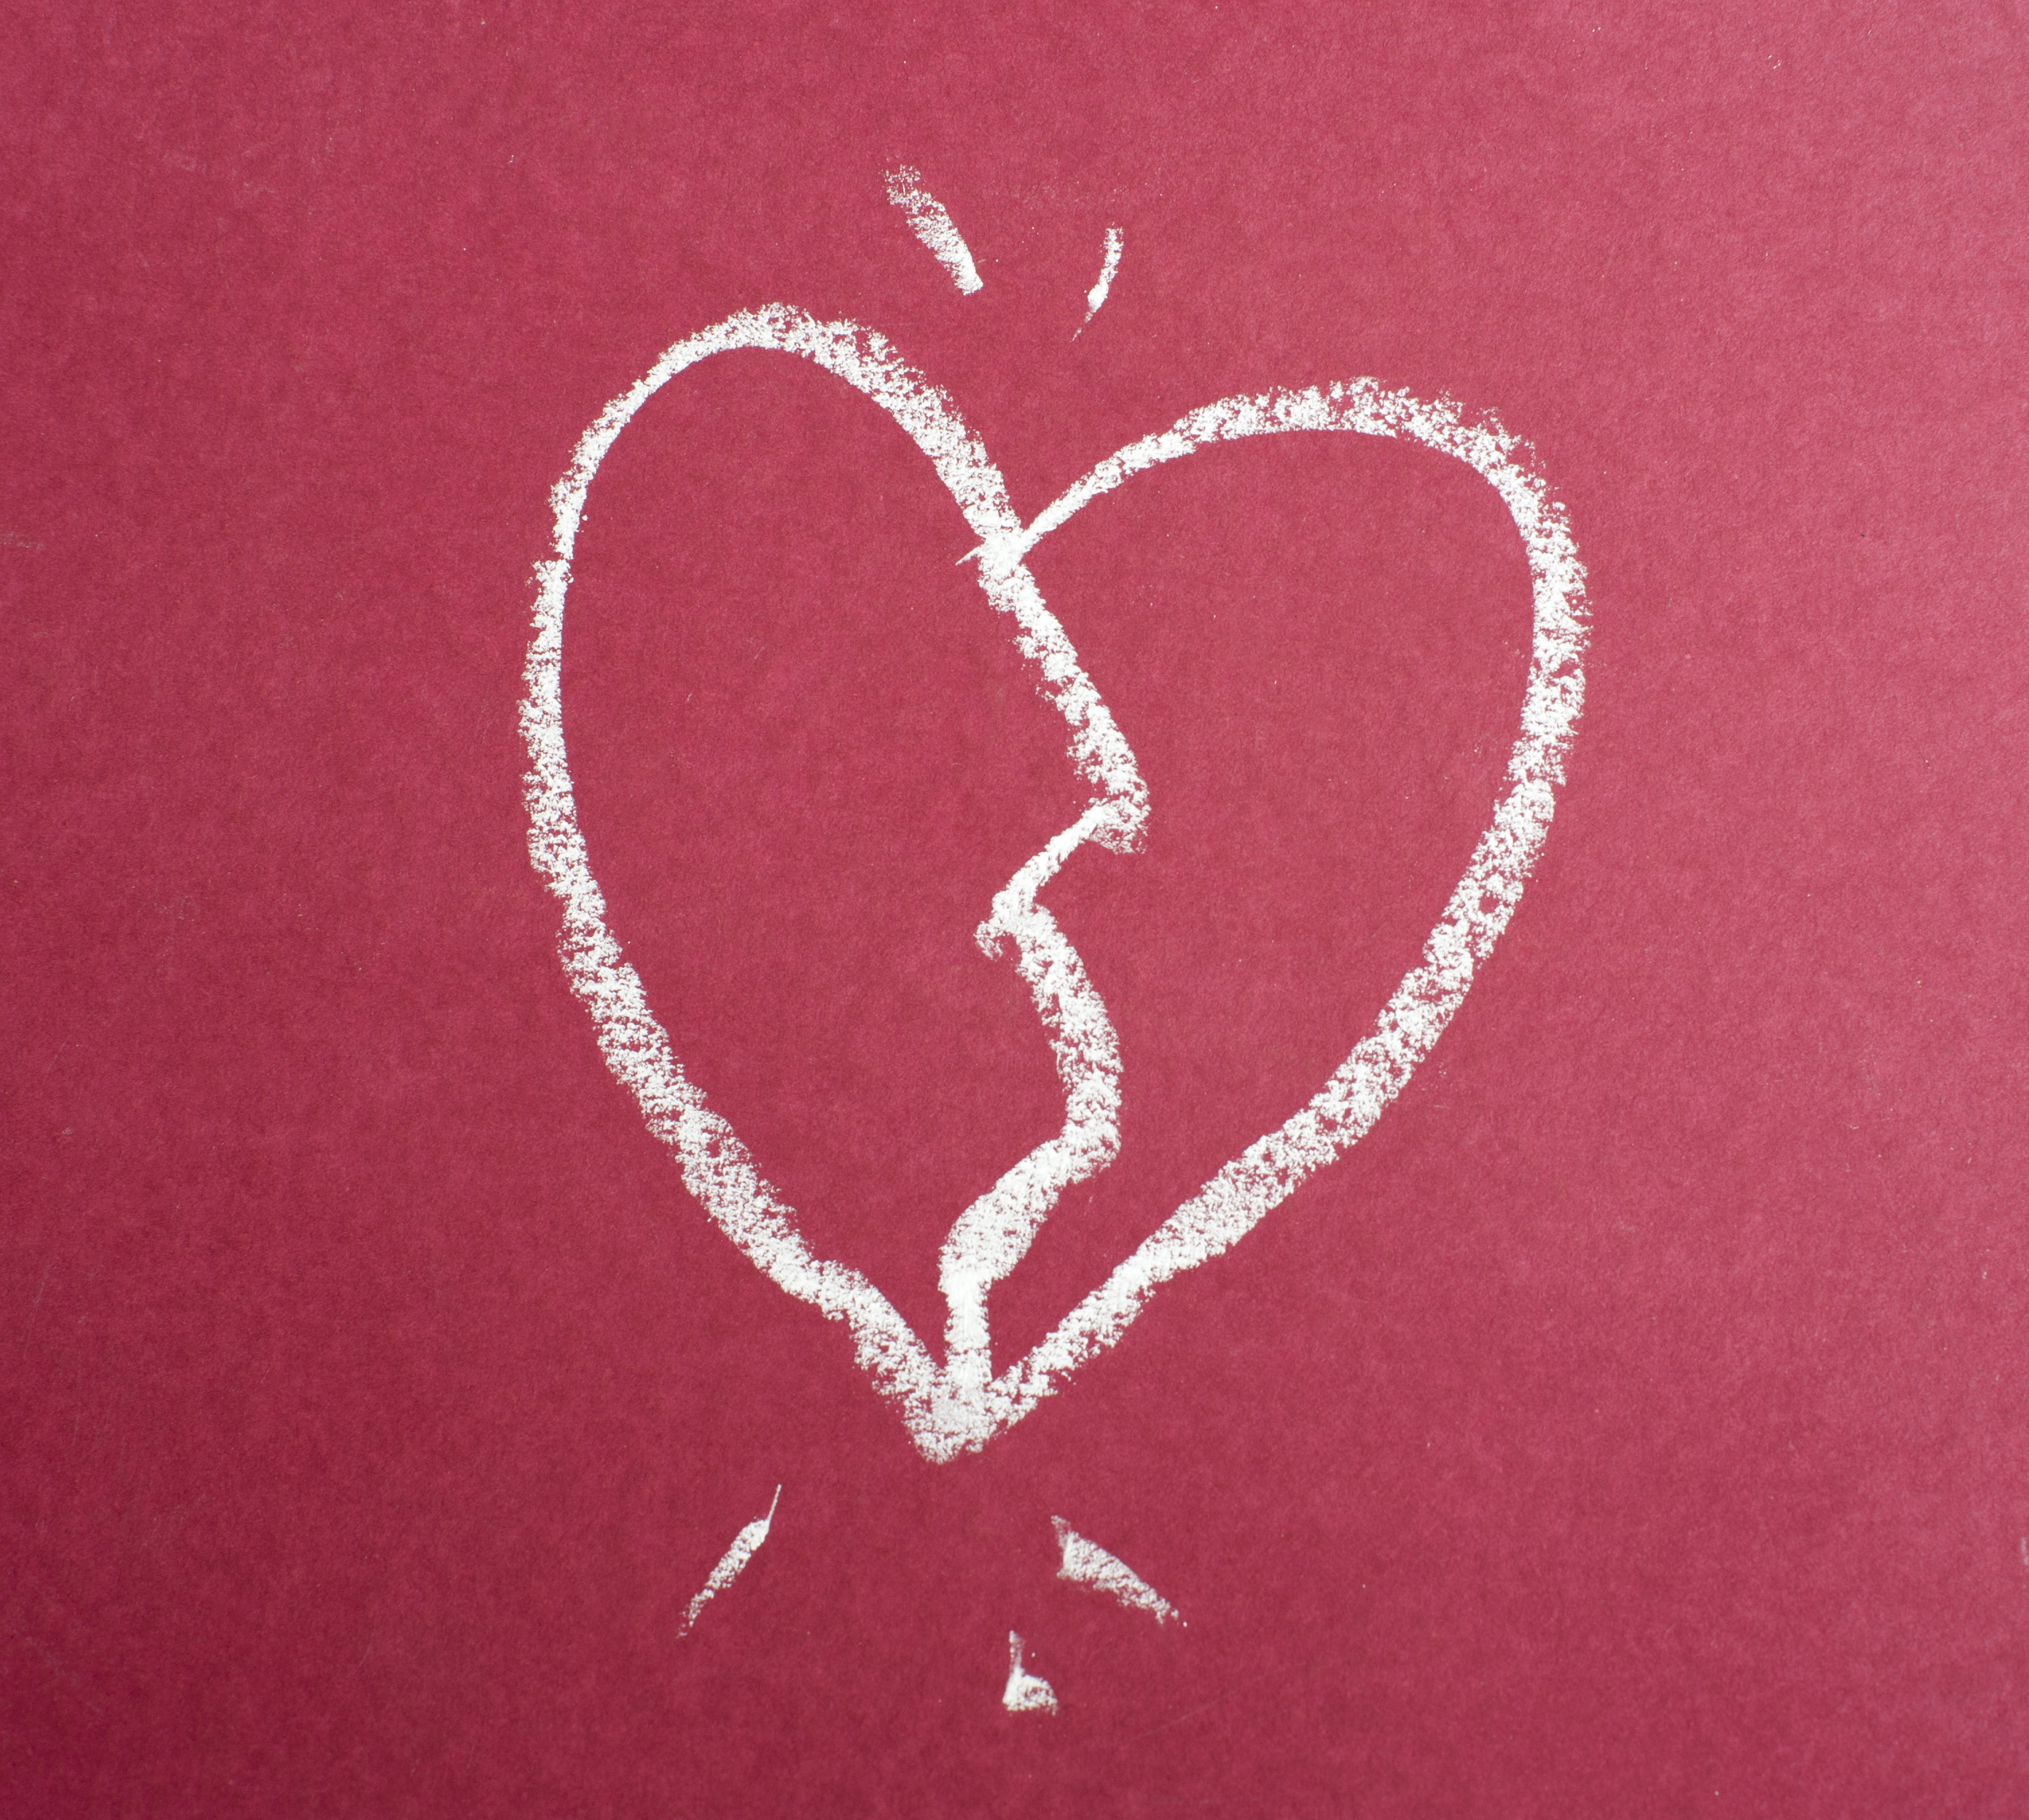 Free Image of A broken love heart sketch 